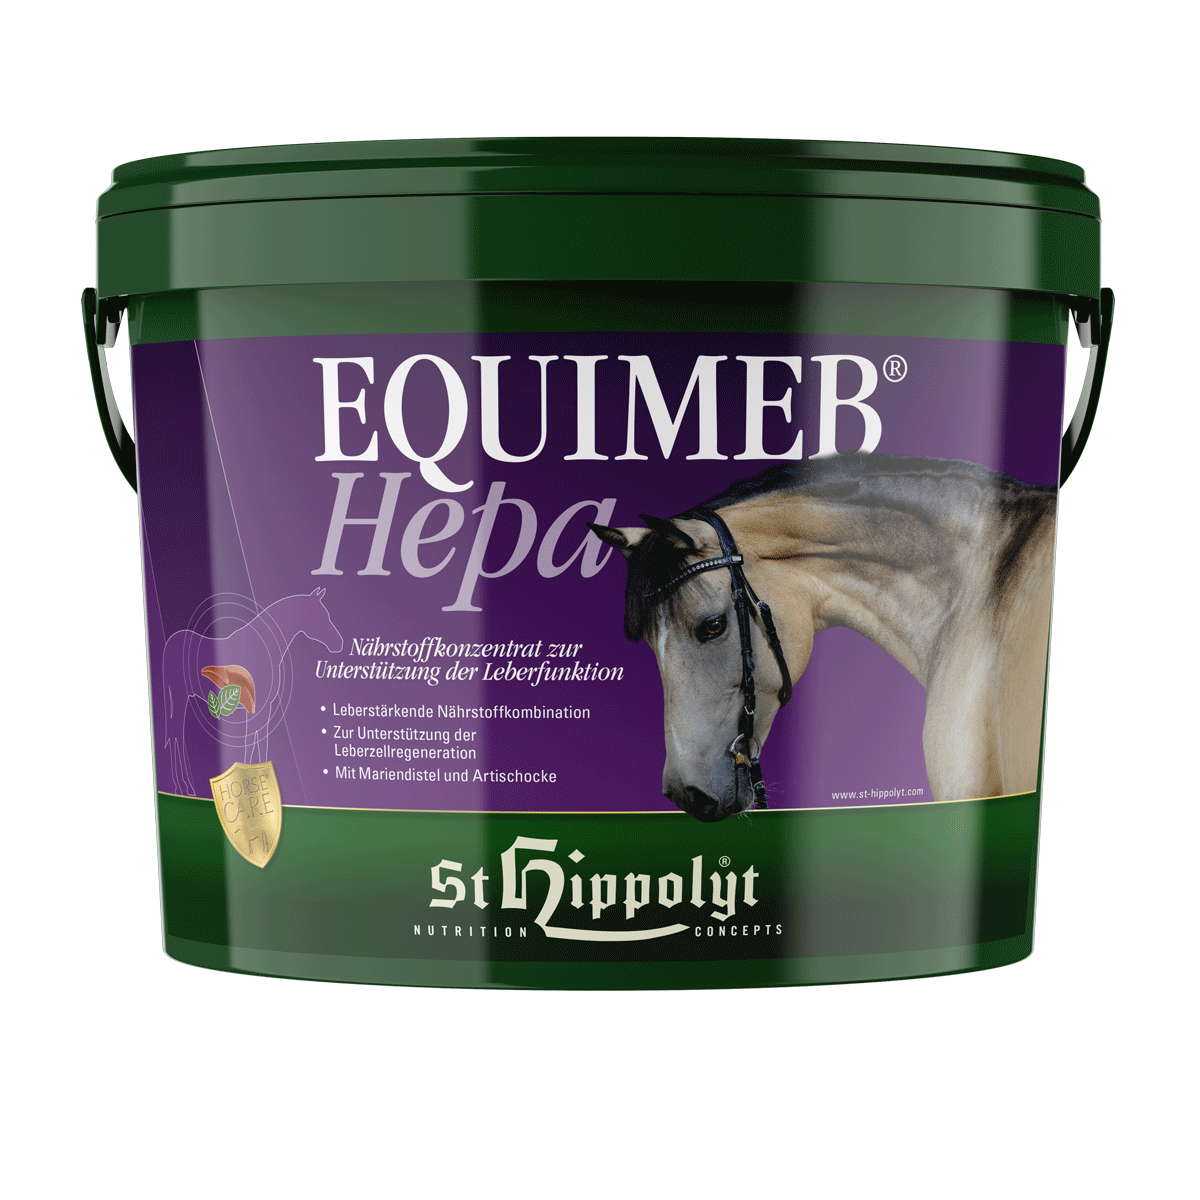 St.Hippolyt Equimeb Hepa - 3 кг